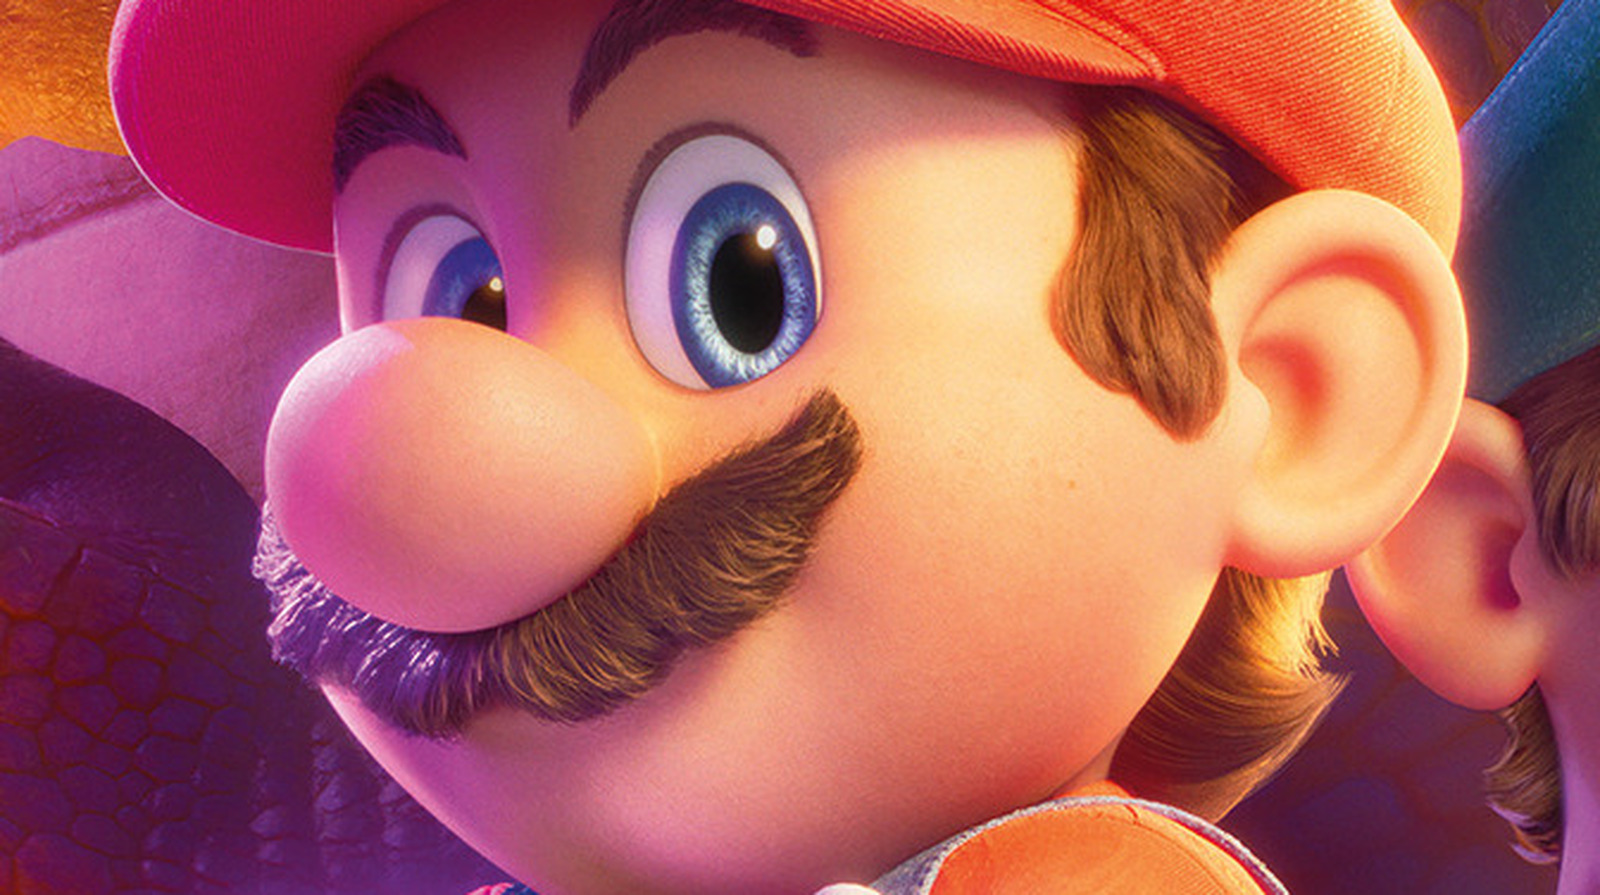 The Super Mario Bros. Movie' is Corporate Nostalgia Done Right